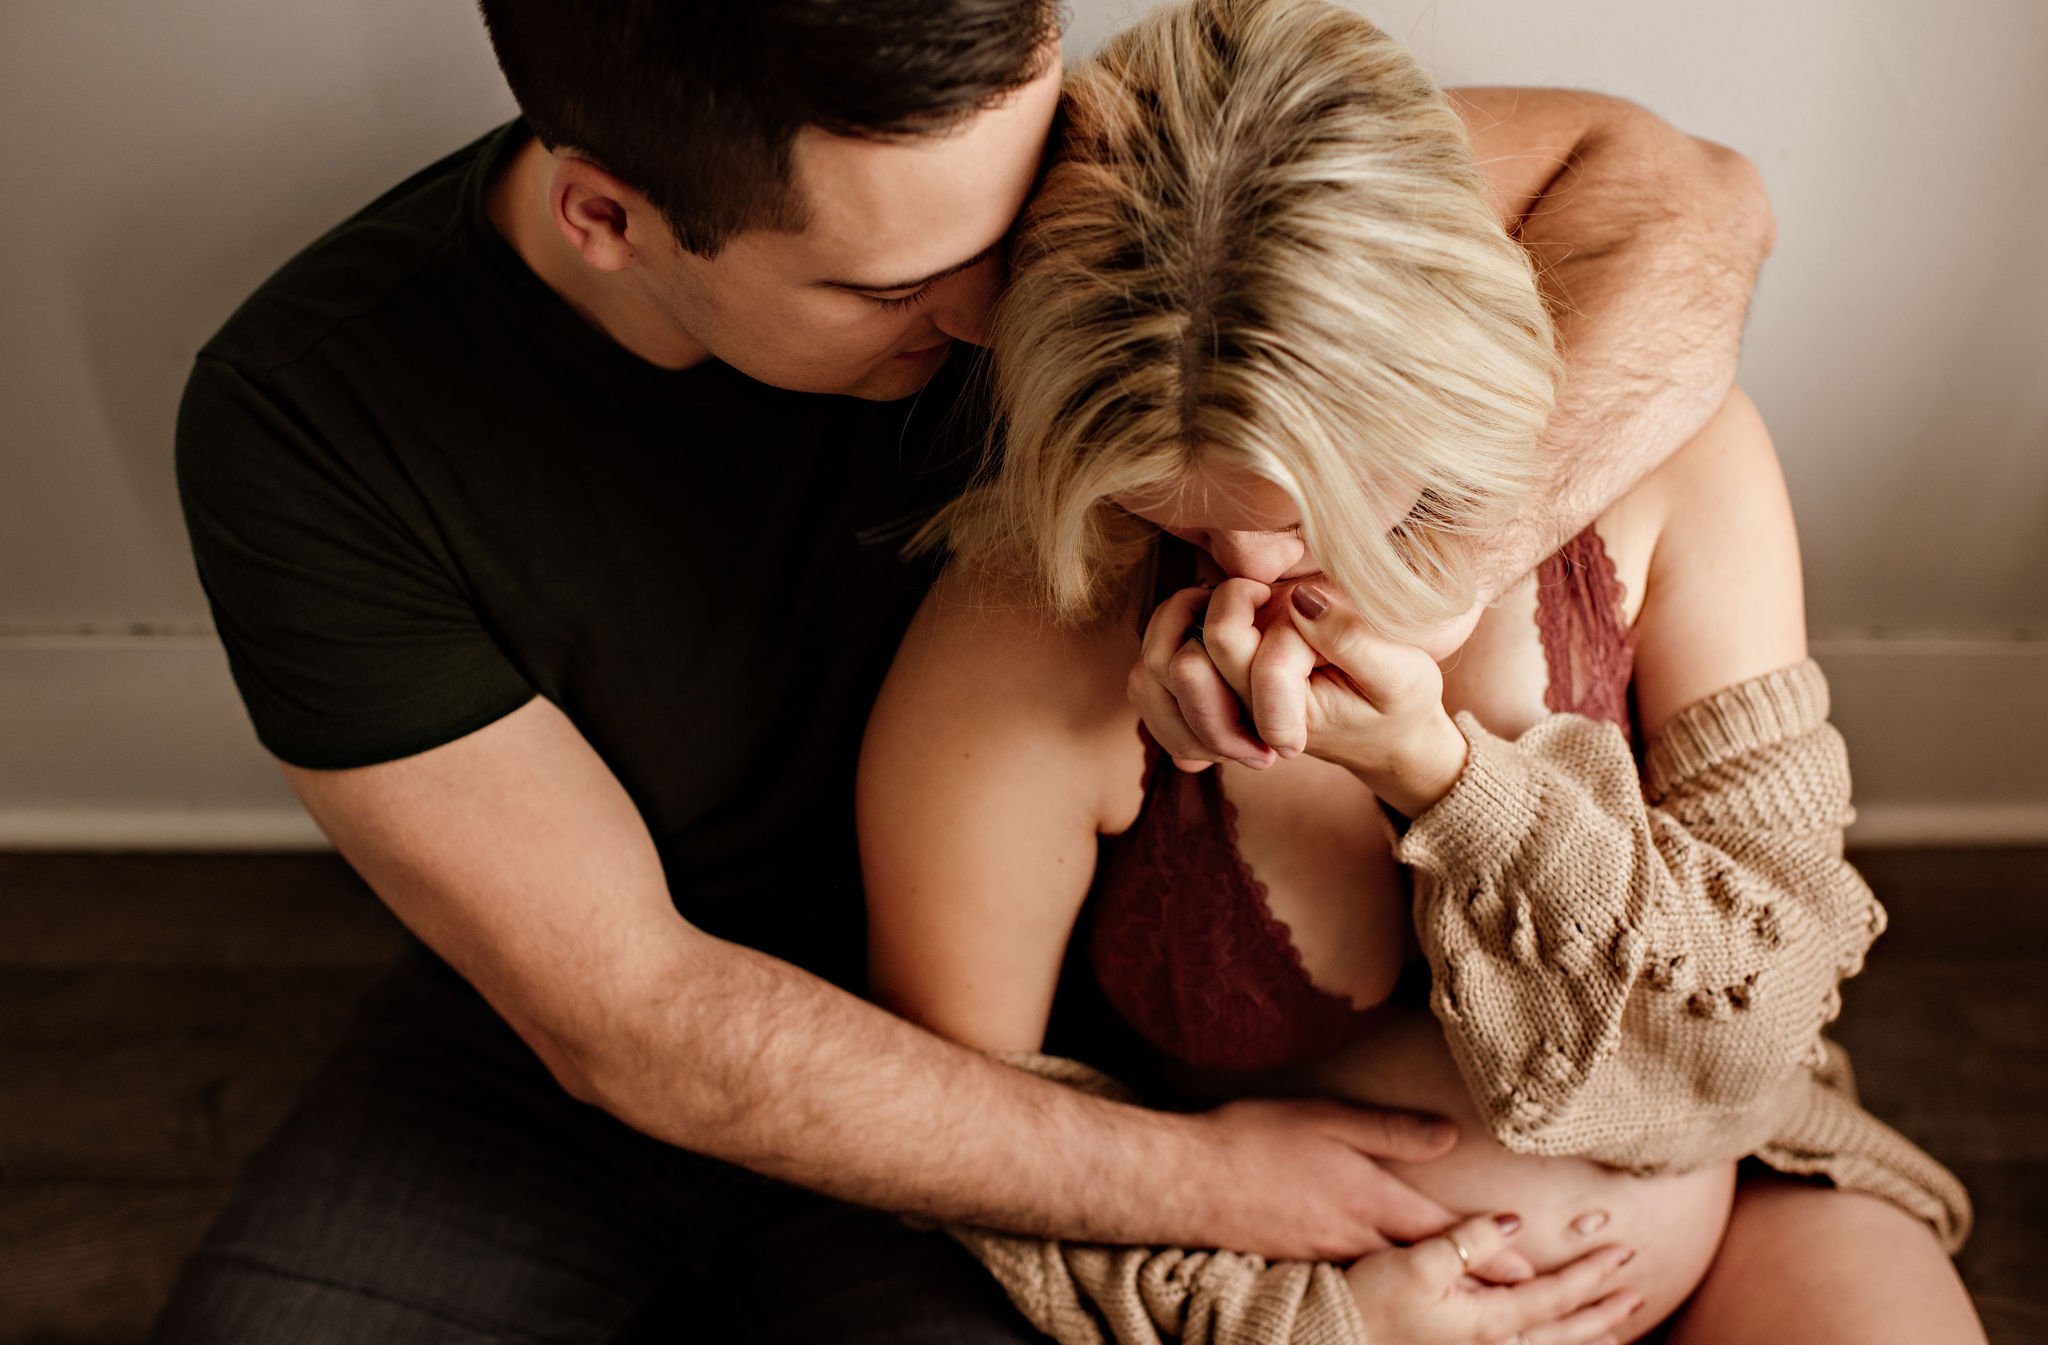 cleveland-ohio-boudoir-maternity-couples-photo-session-lauren-grayson8.jpeg